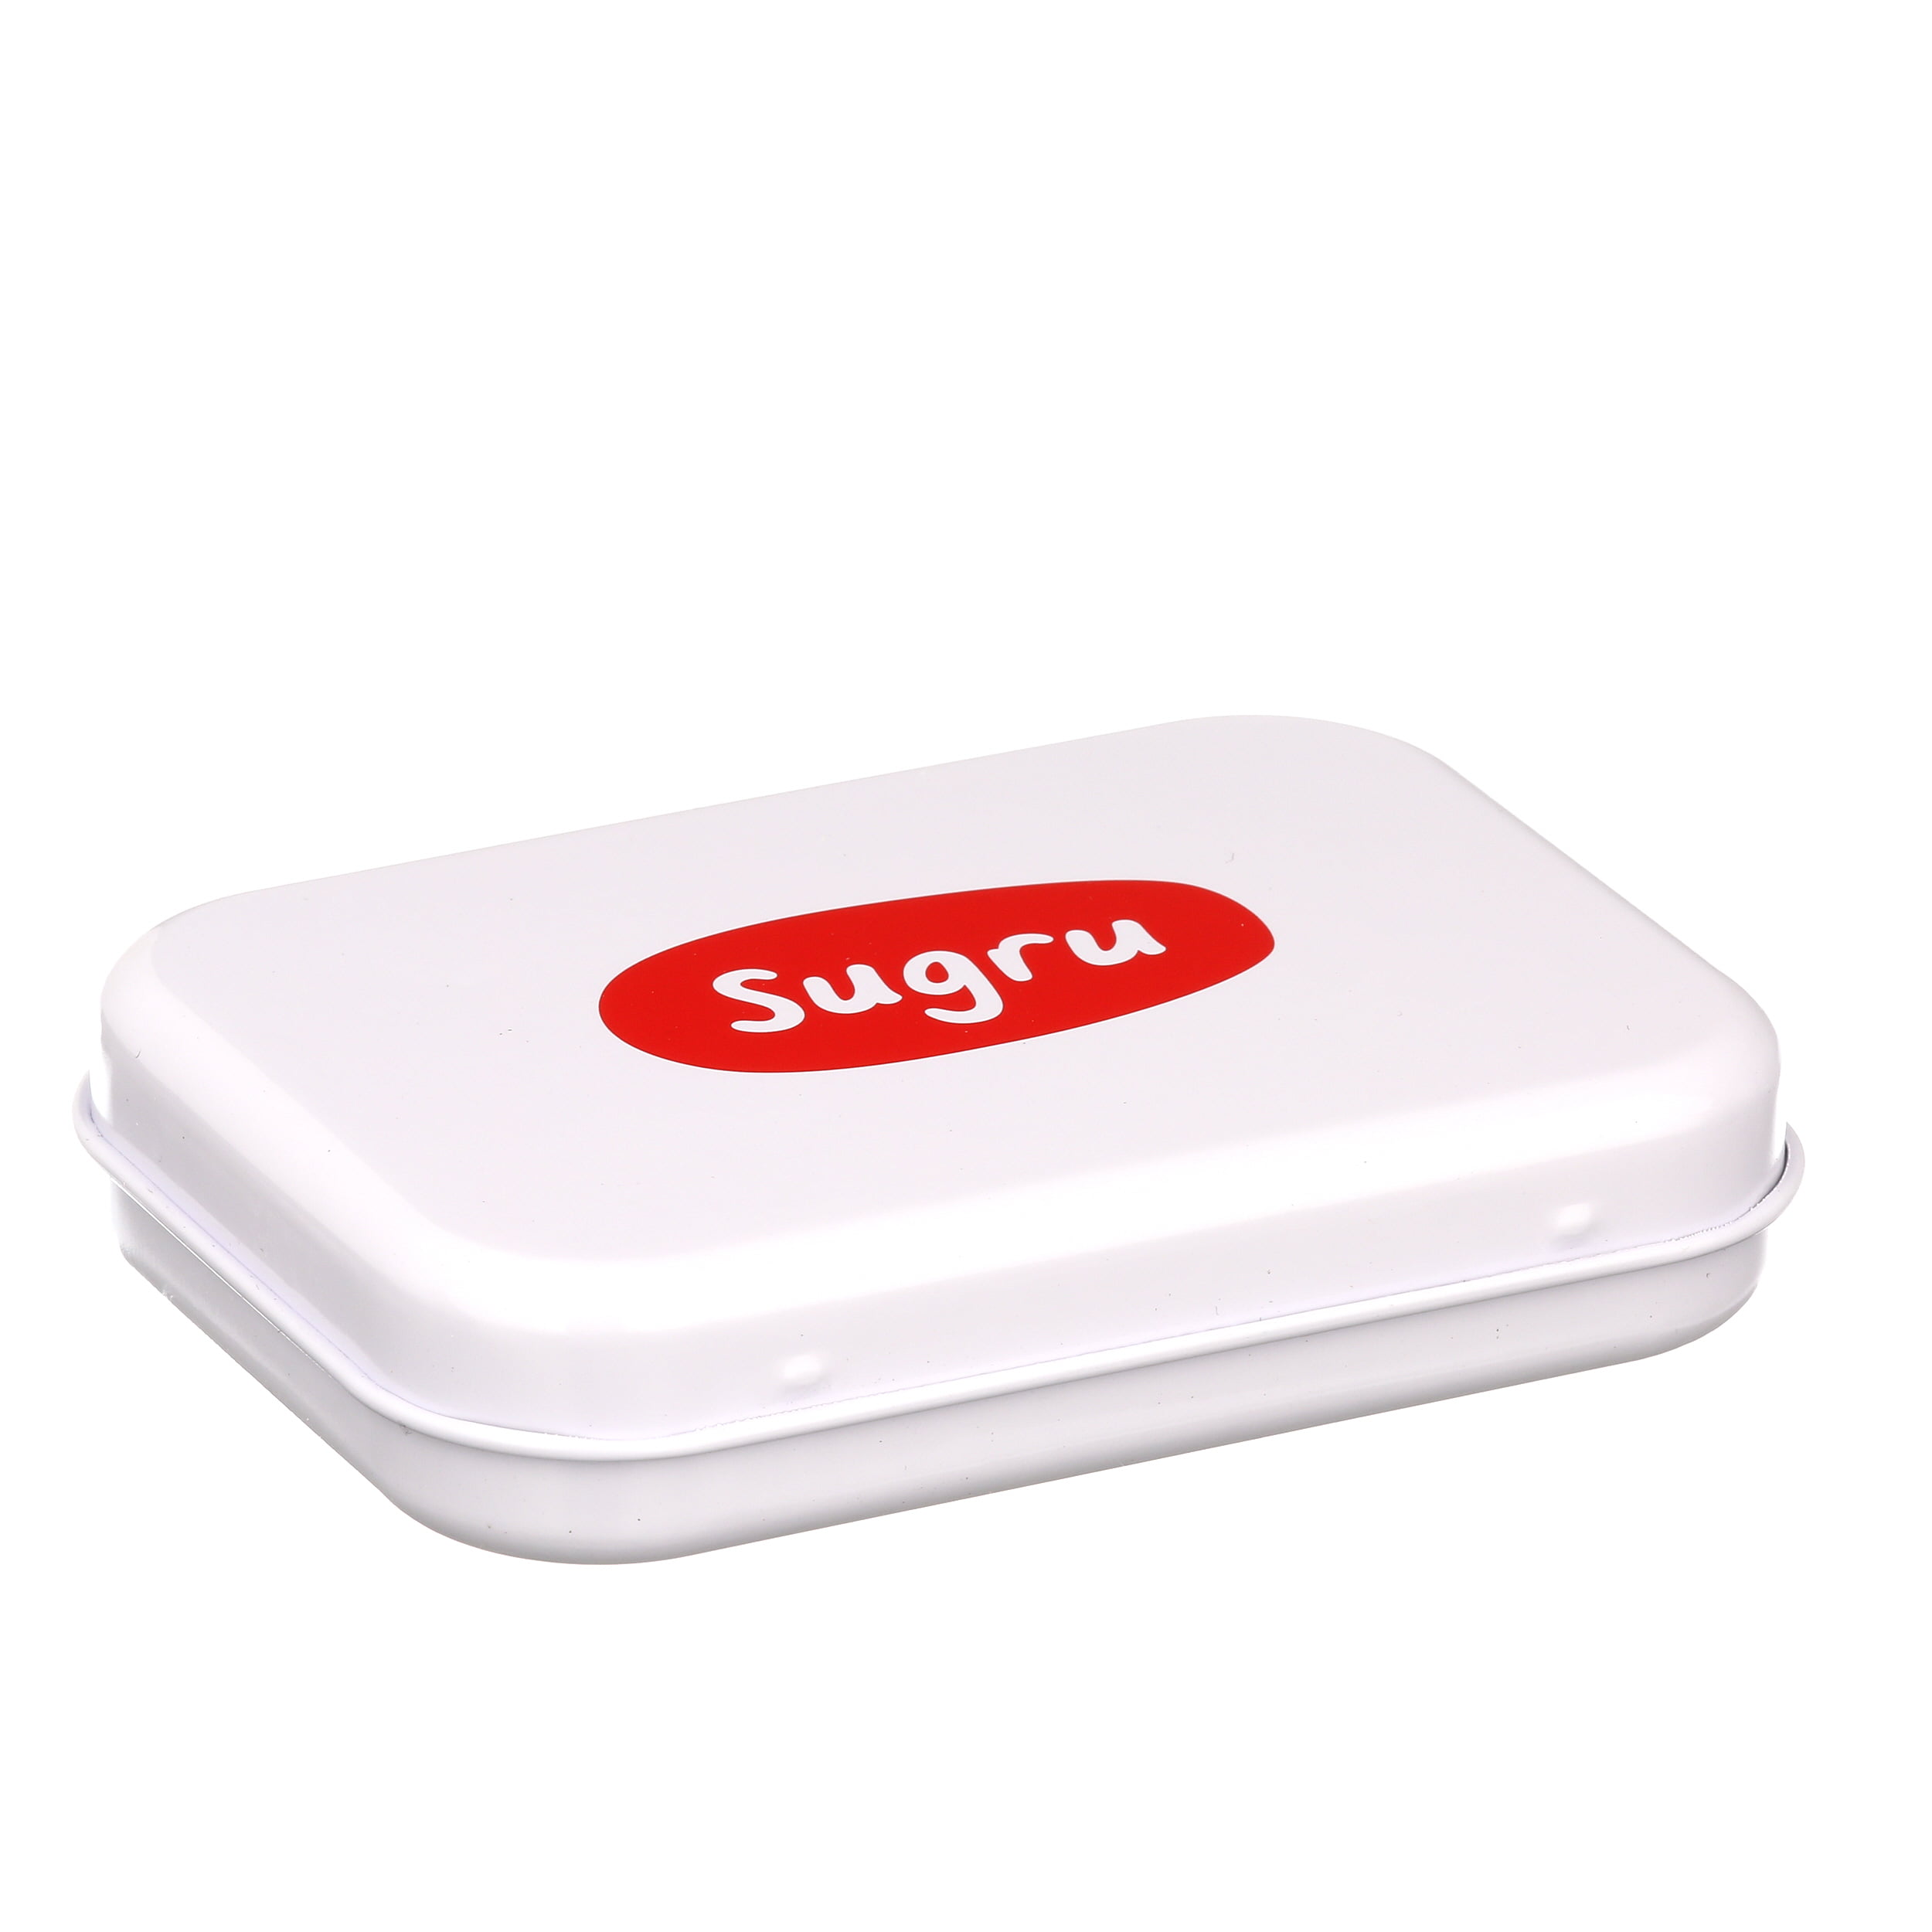 Sugru Rebel Tech Kit — The MagPi magazine